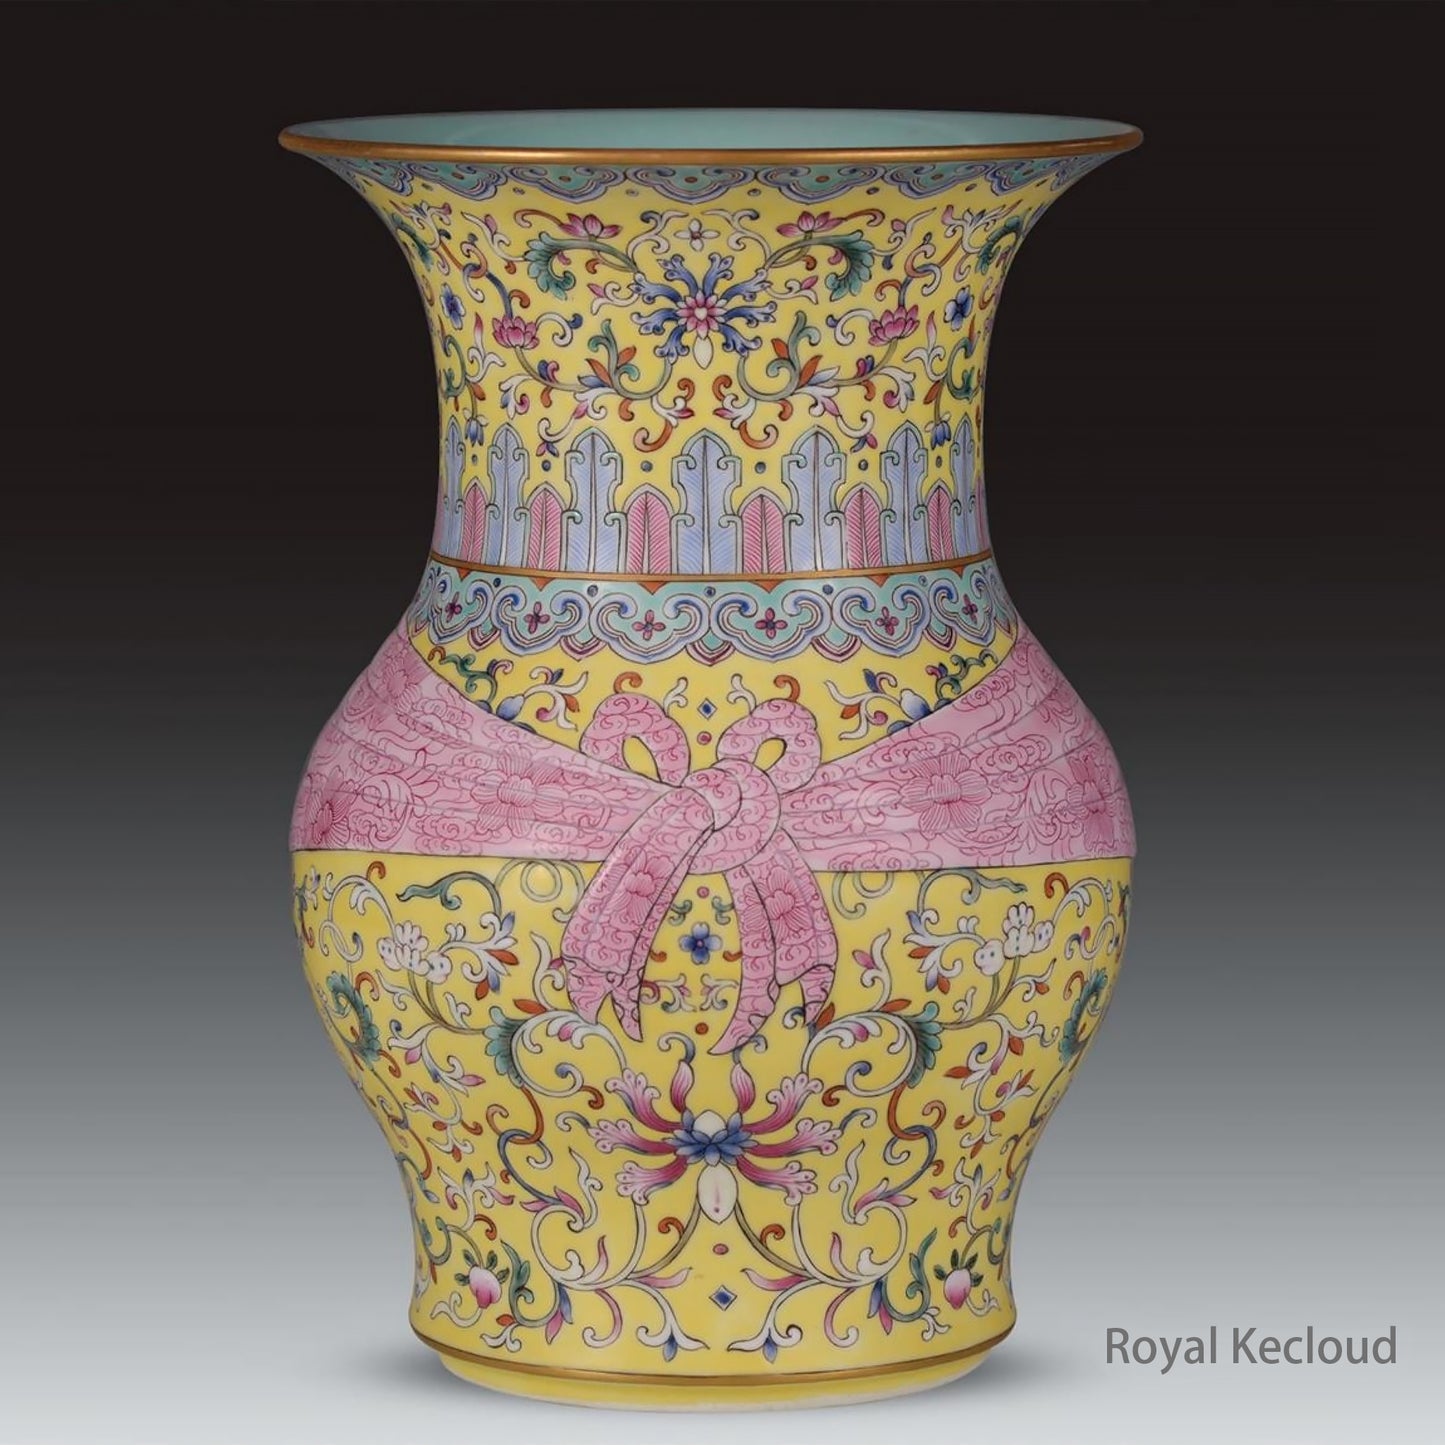 A Rare Famille-rose Porcelain Vases with Cloth-wrapper Design